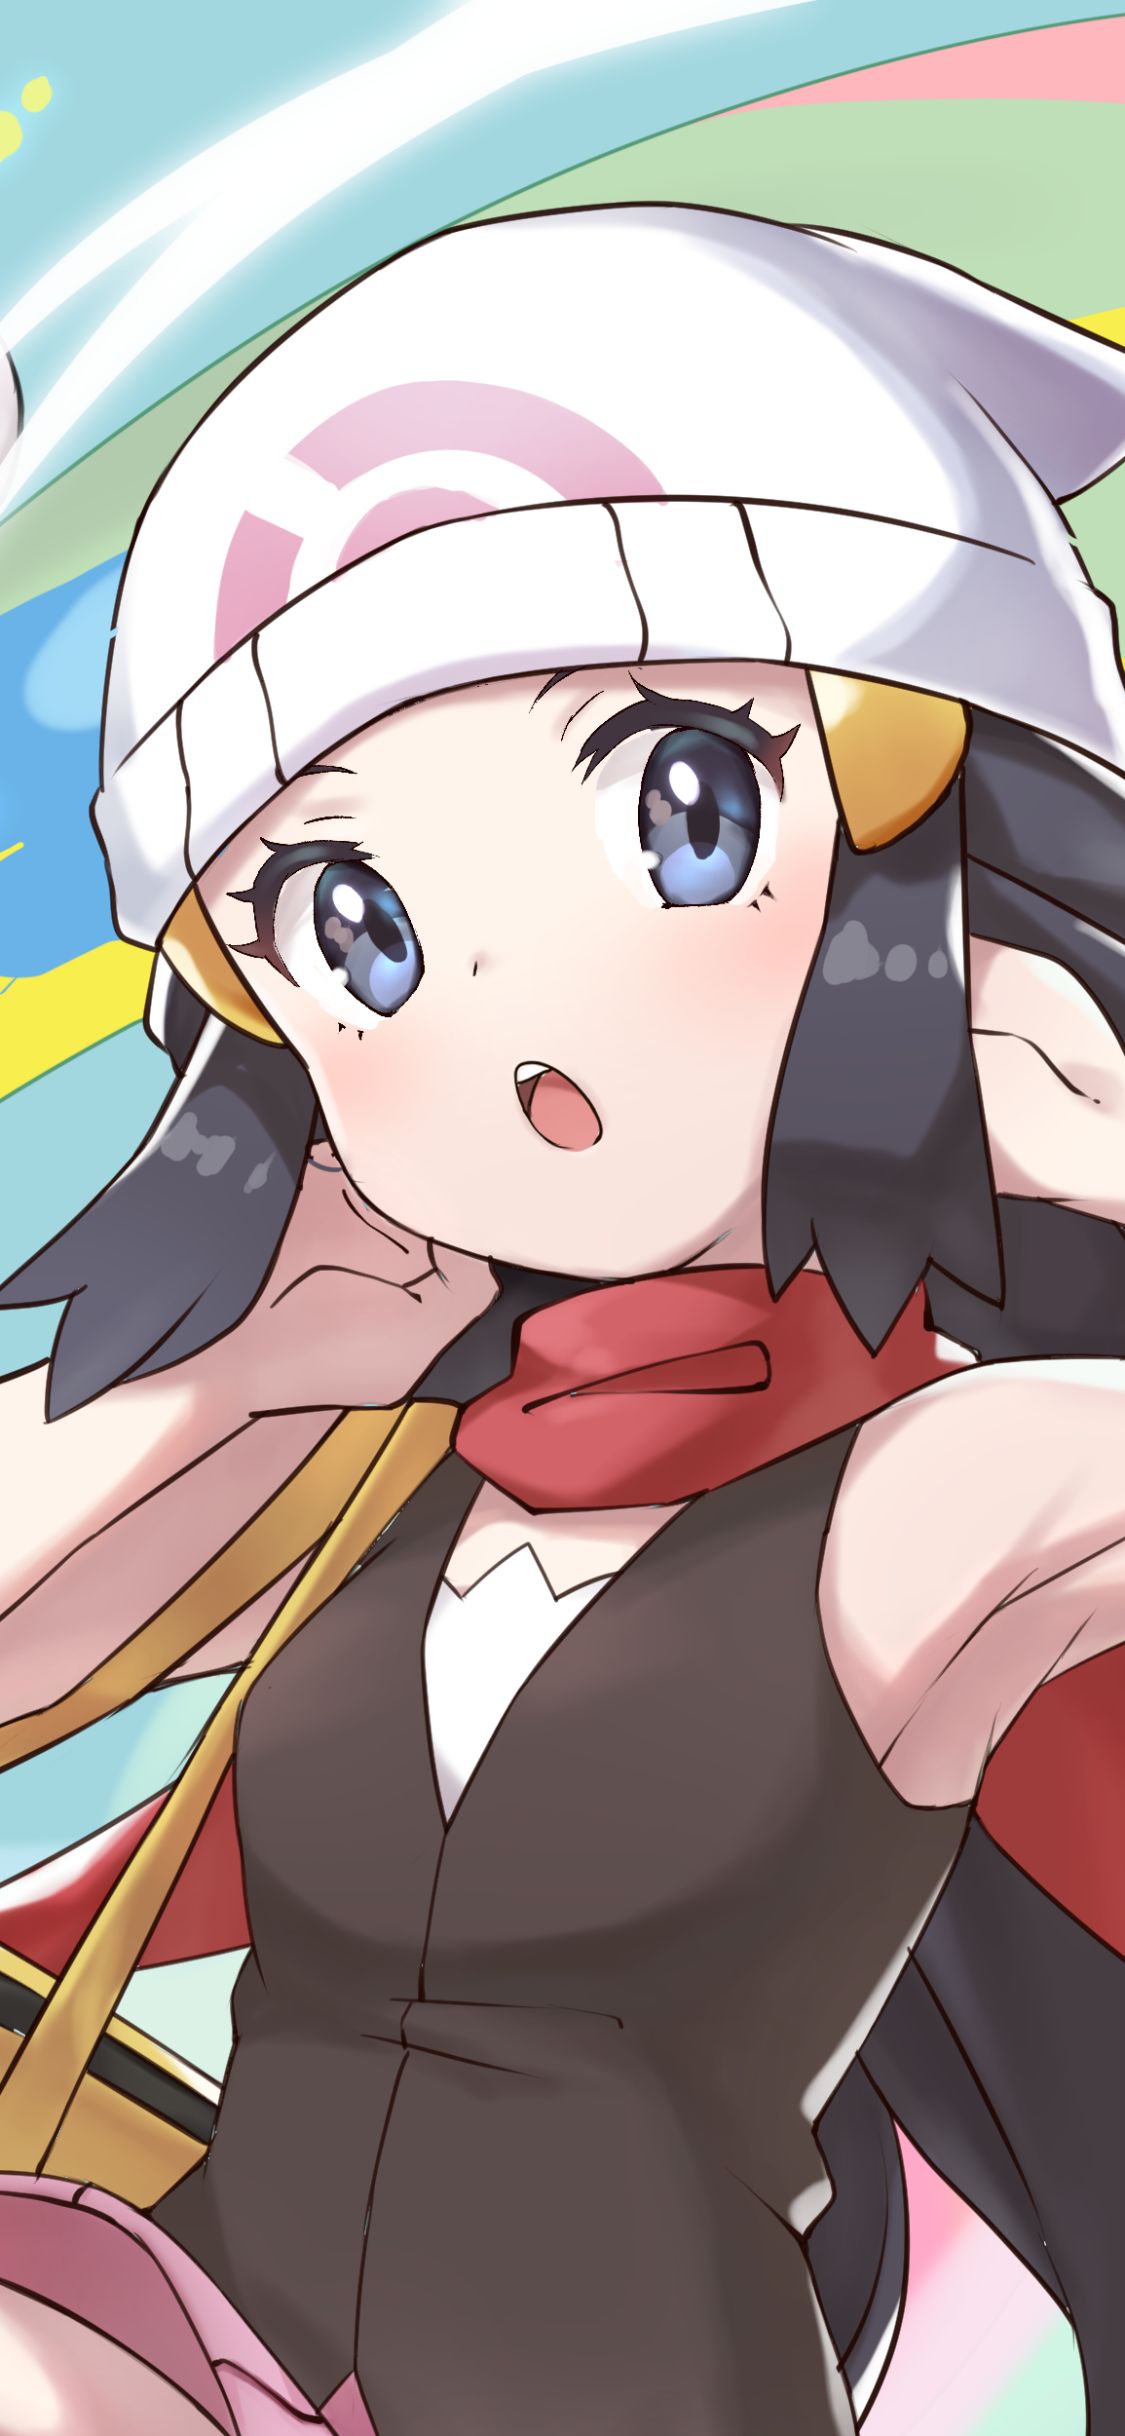 Descarga gratuita de fondo de pantalla para móvil de Pokémon, Animado, Alba (Pokémon).